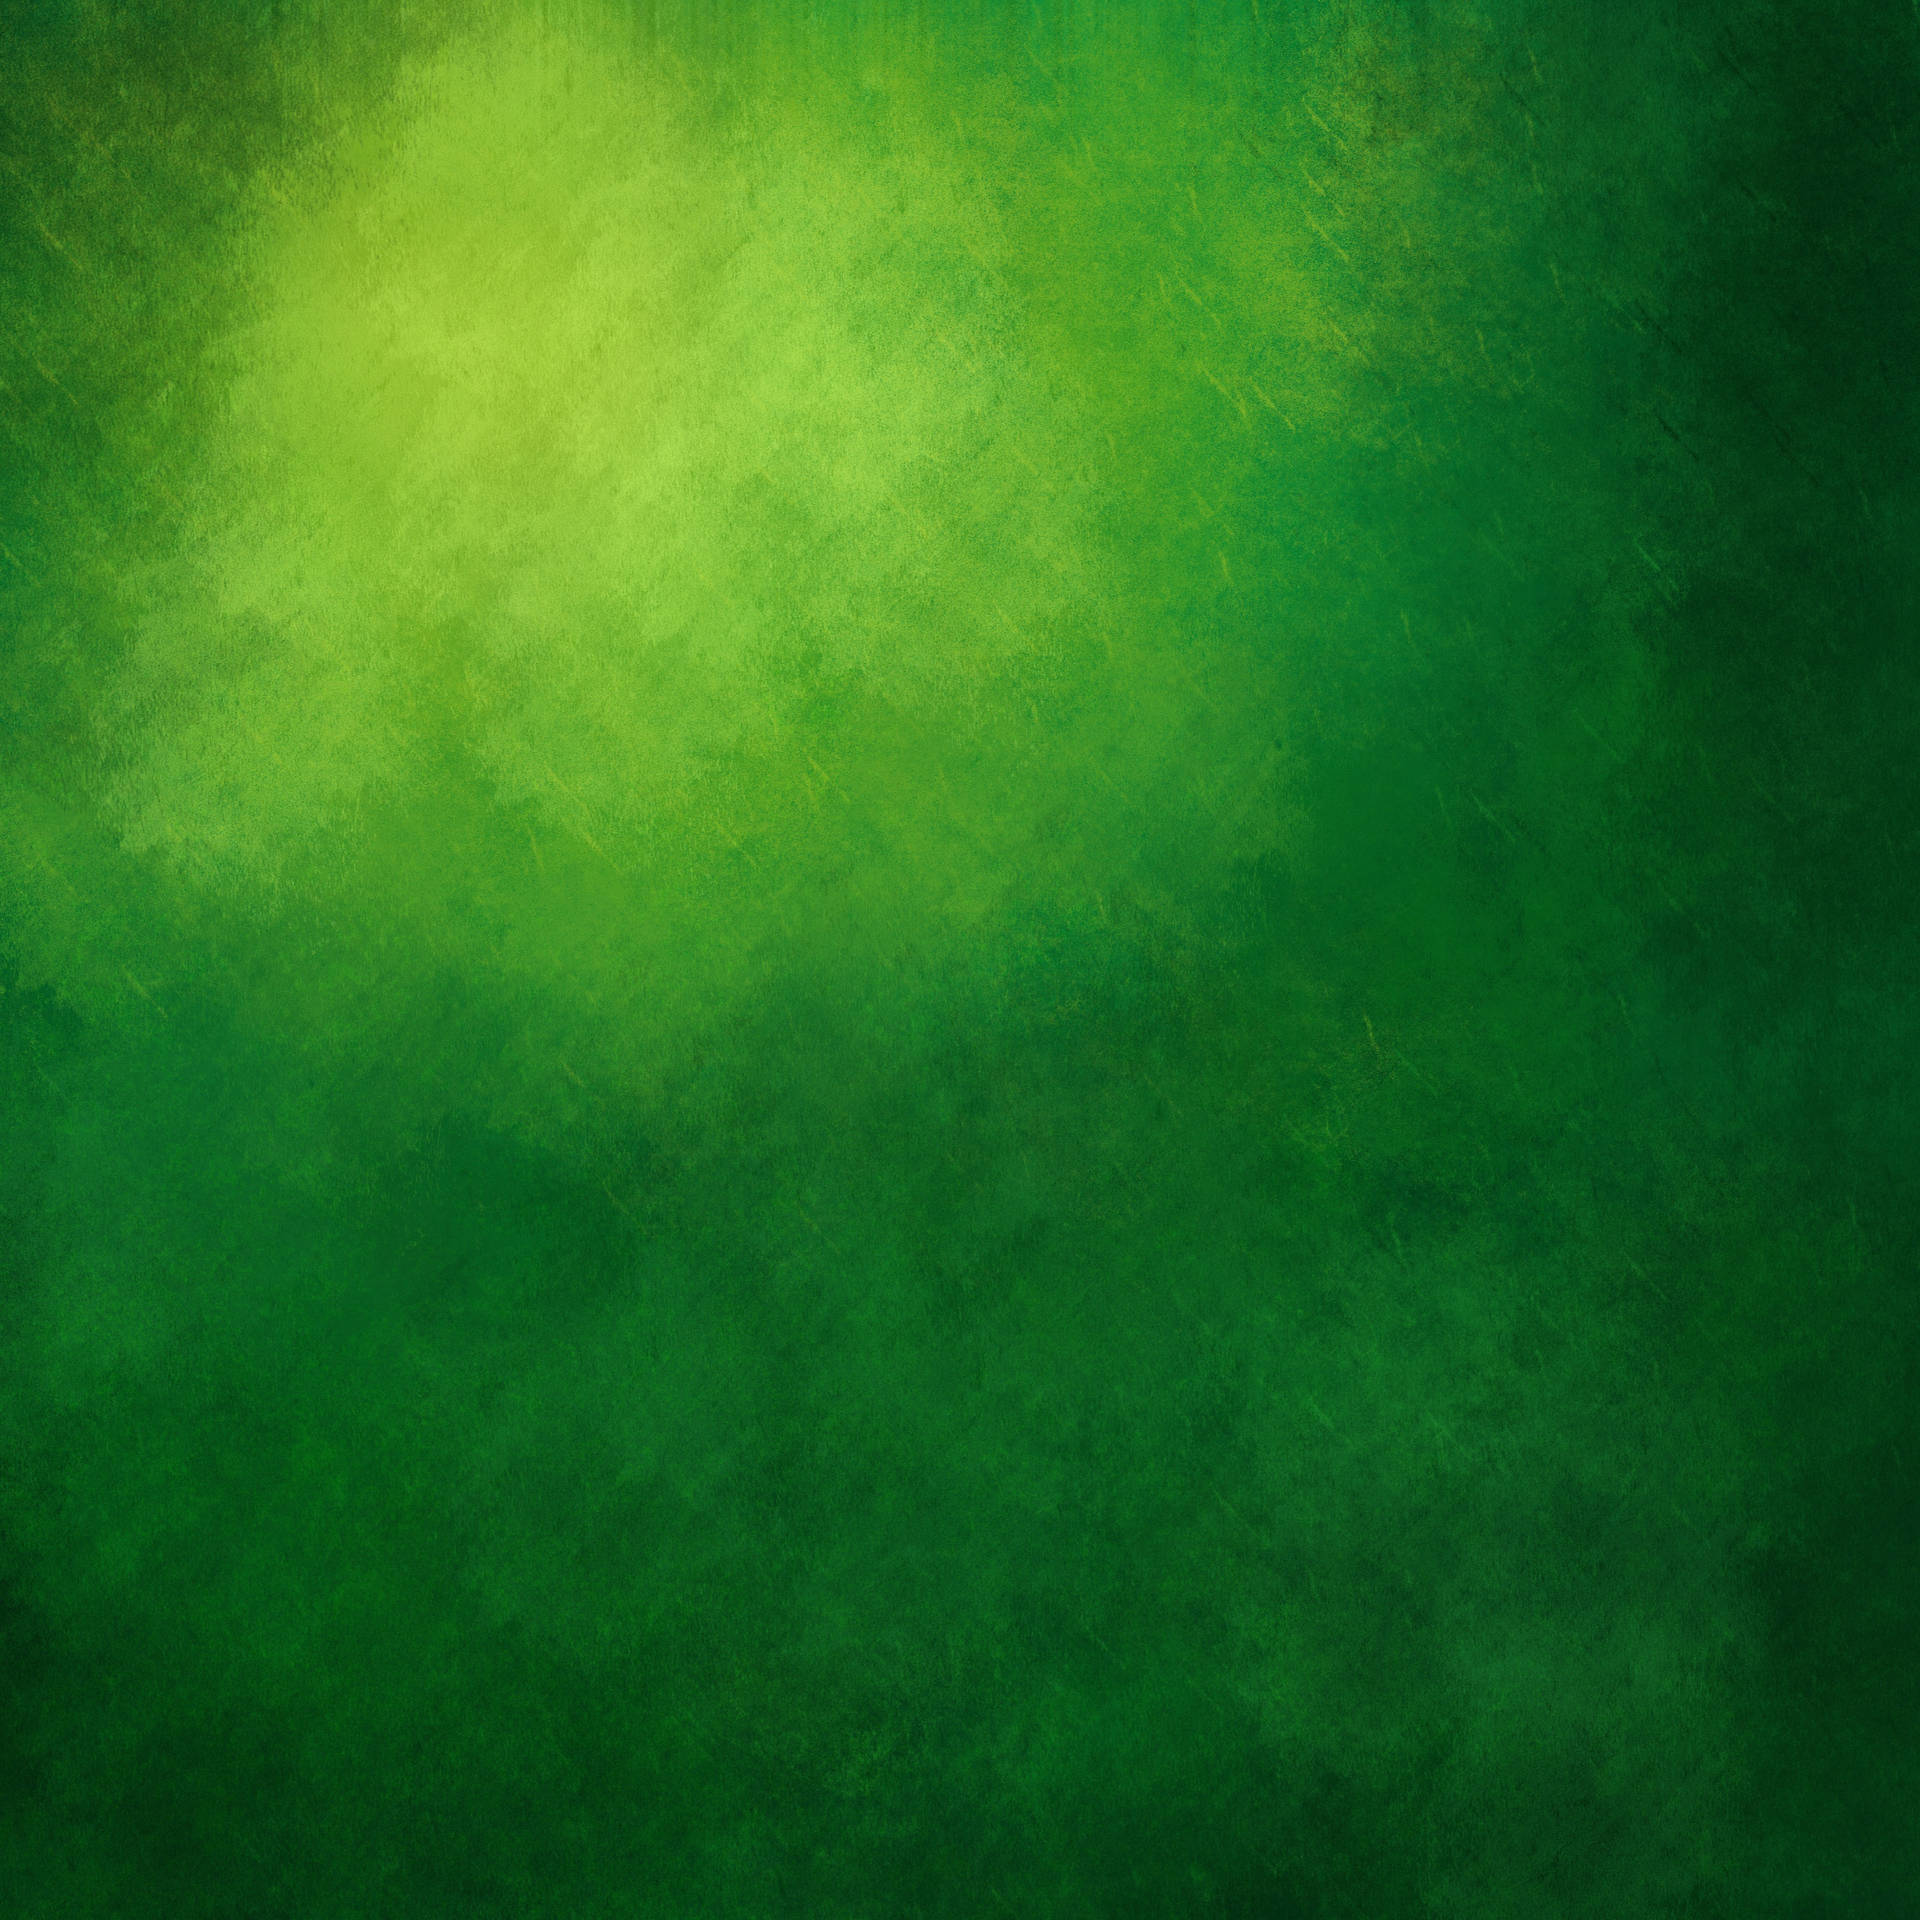 Paint Grunge Yellow Green Background